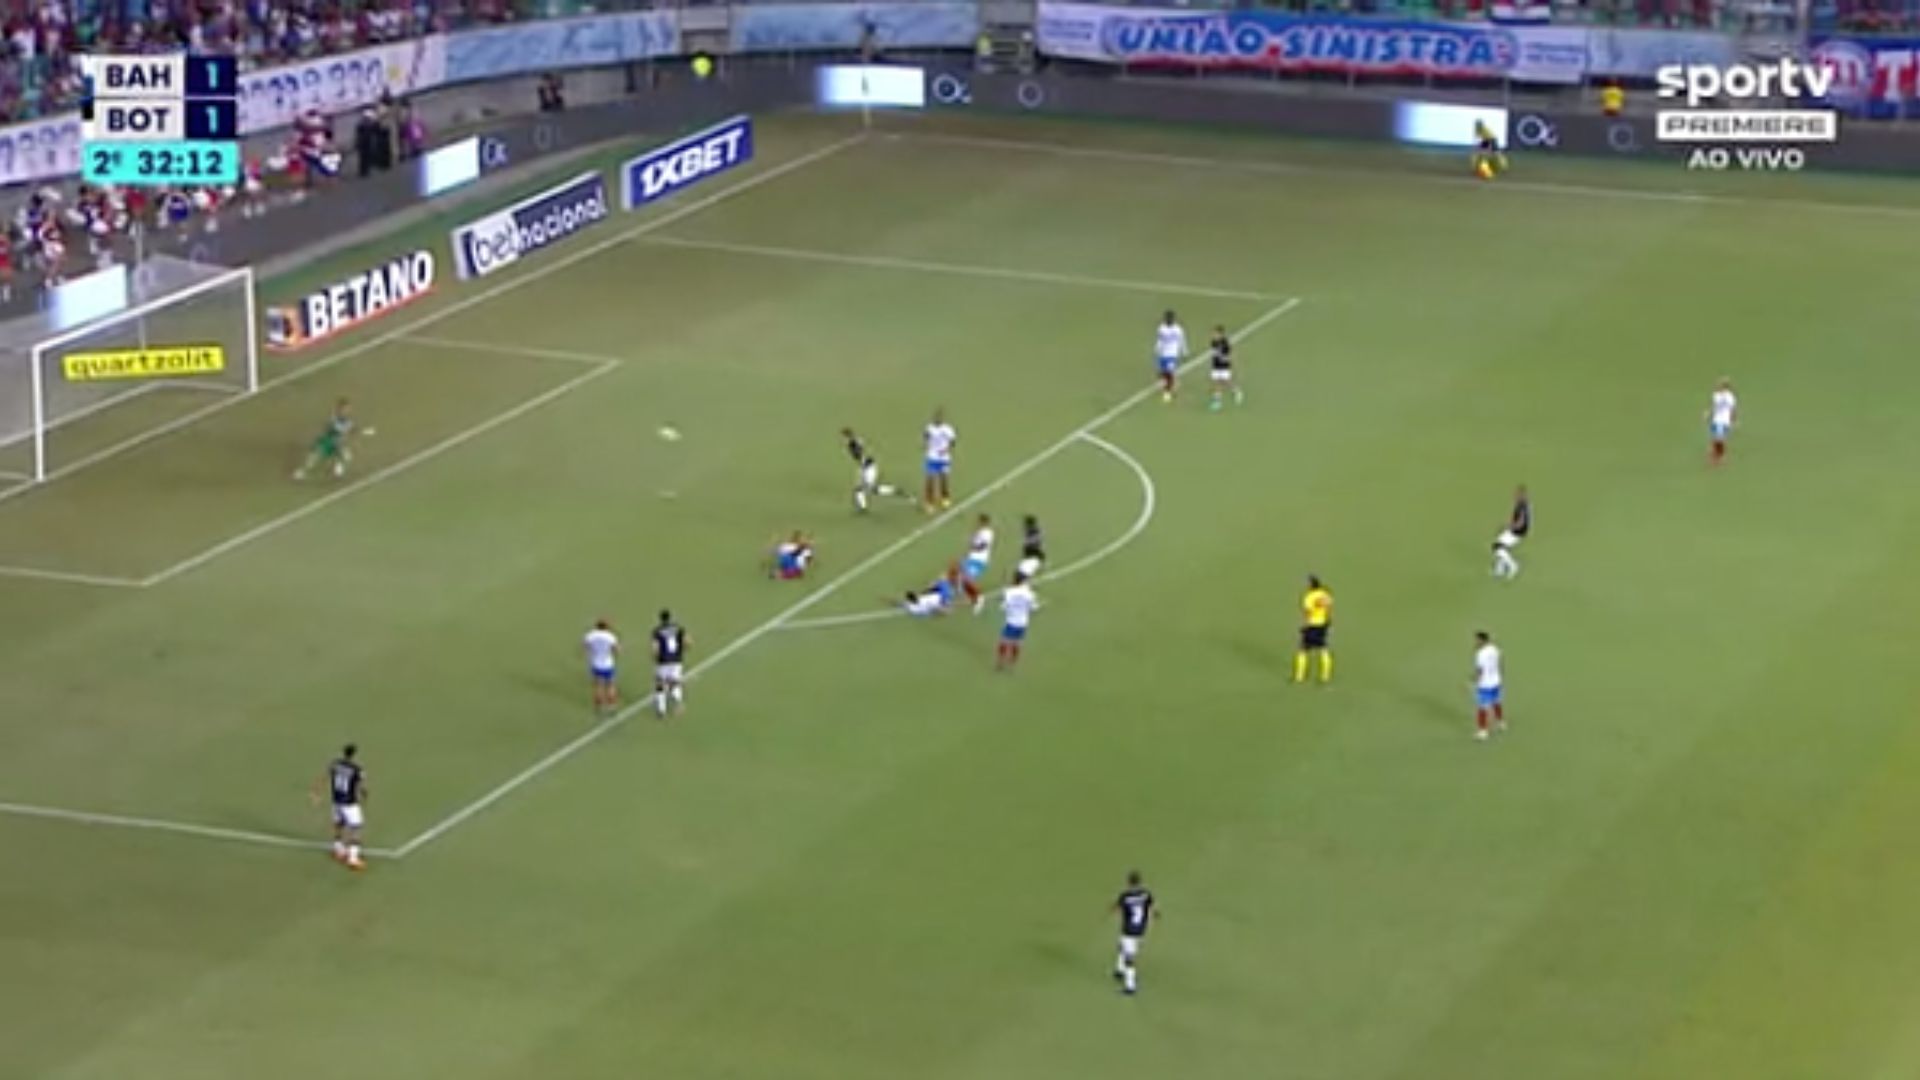 Moment of Botafogo's goal